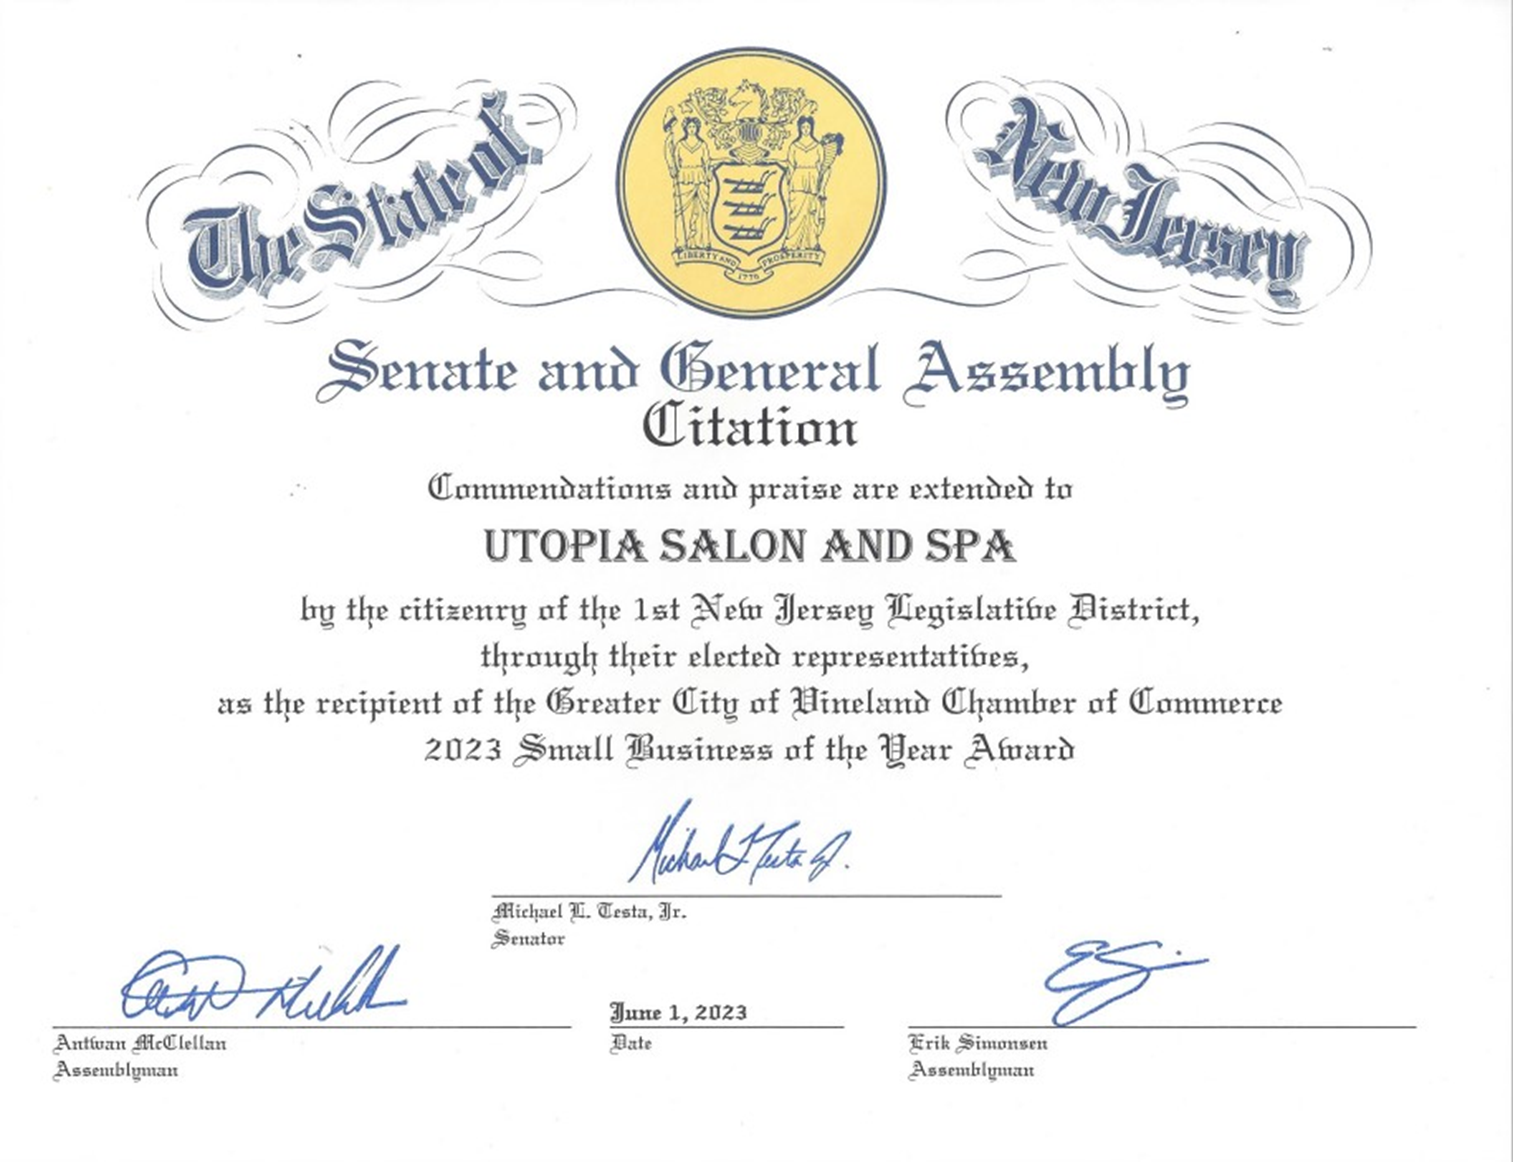 Senate and General Assembly Citation